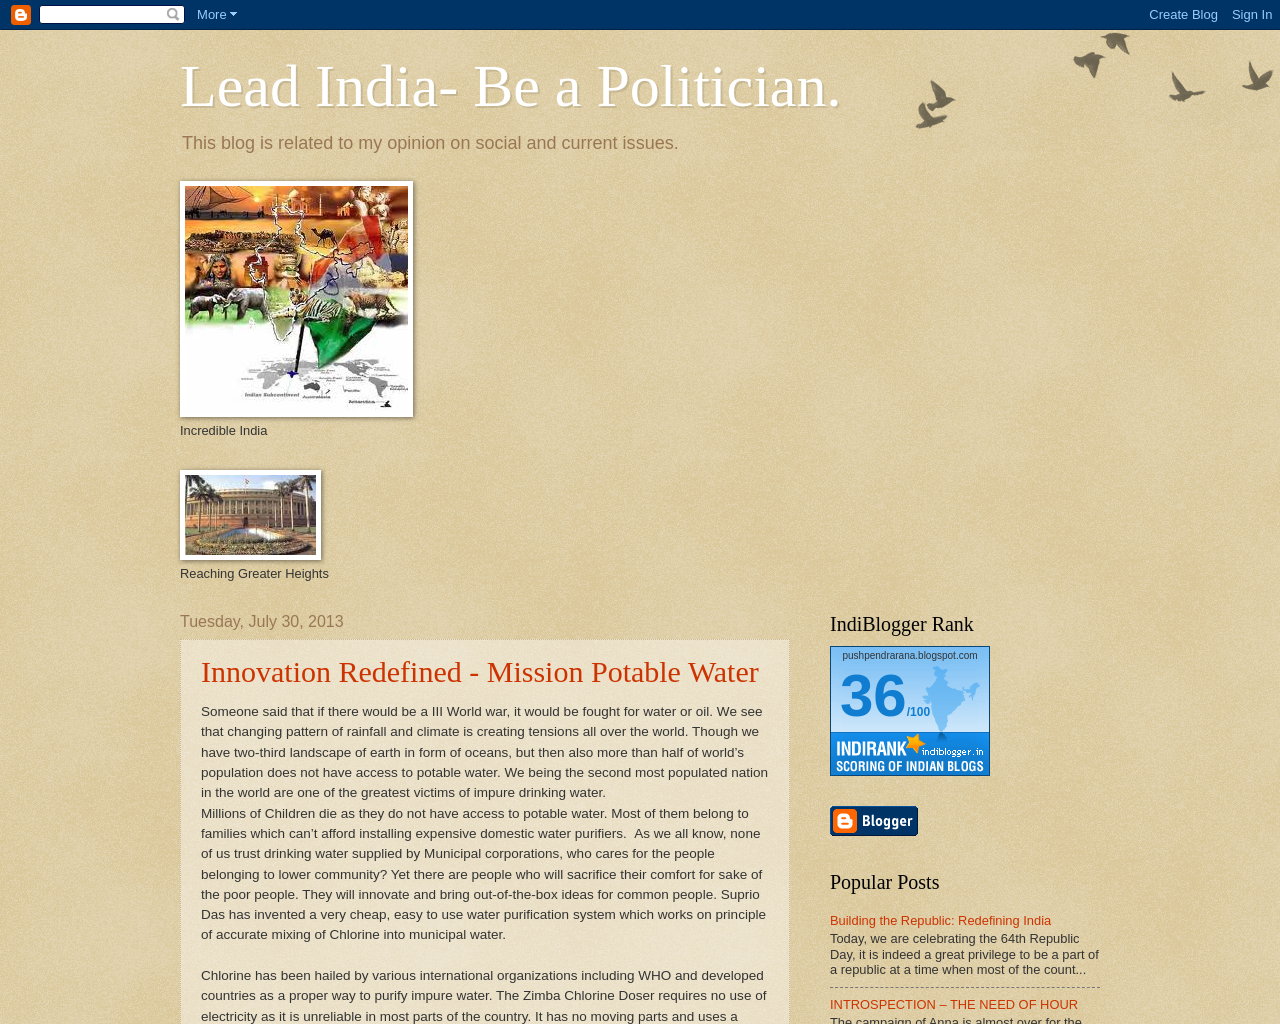 Lead India - Be a Politician